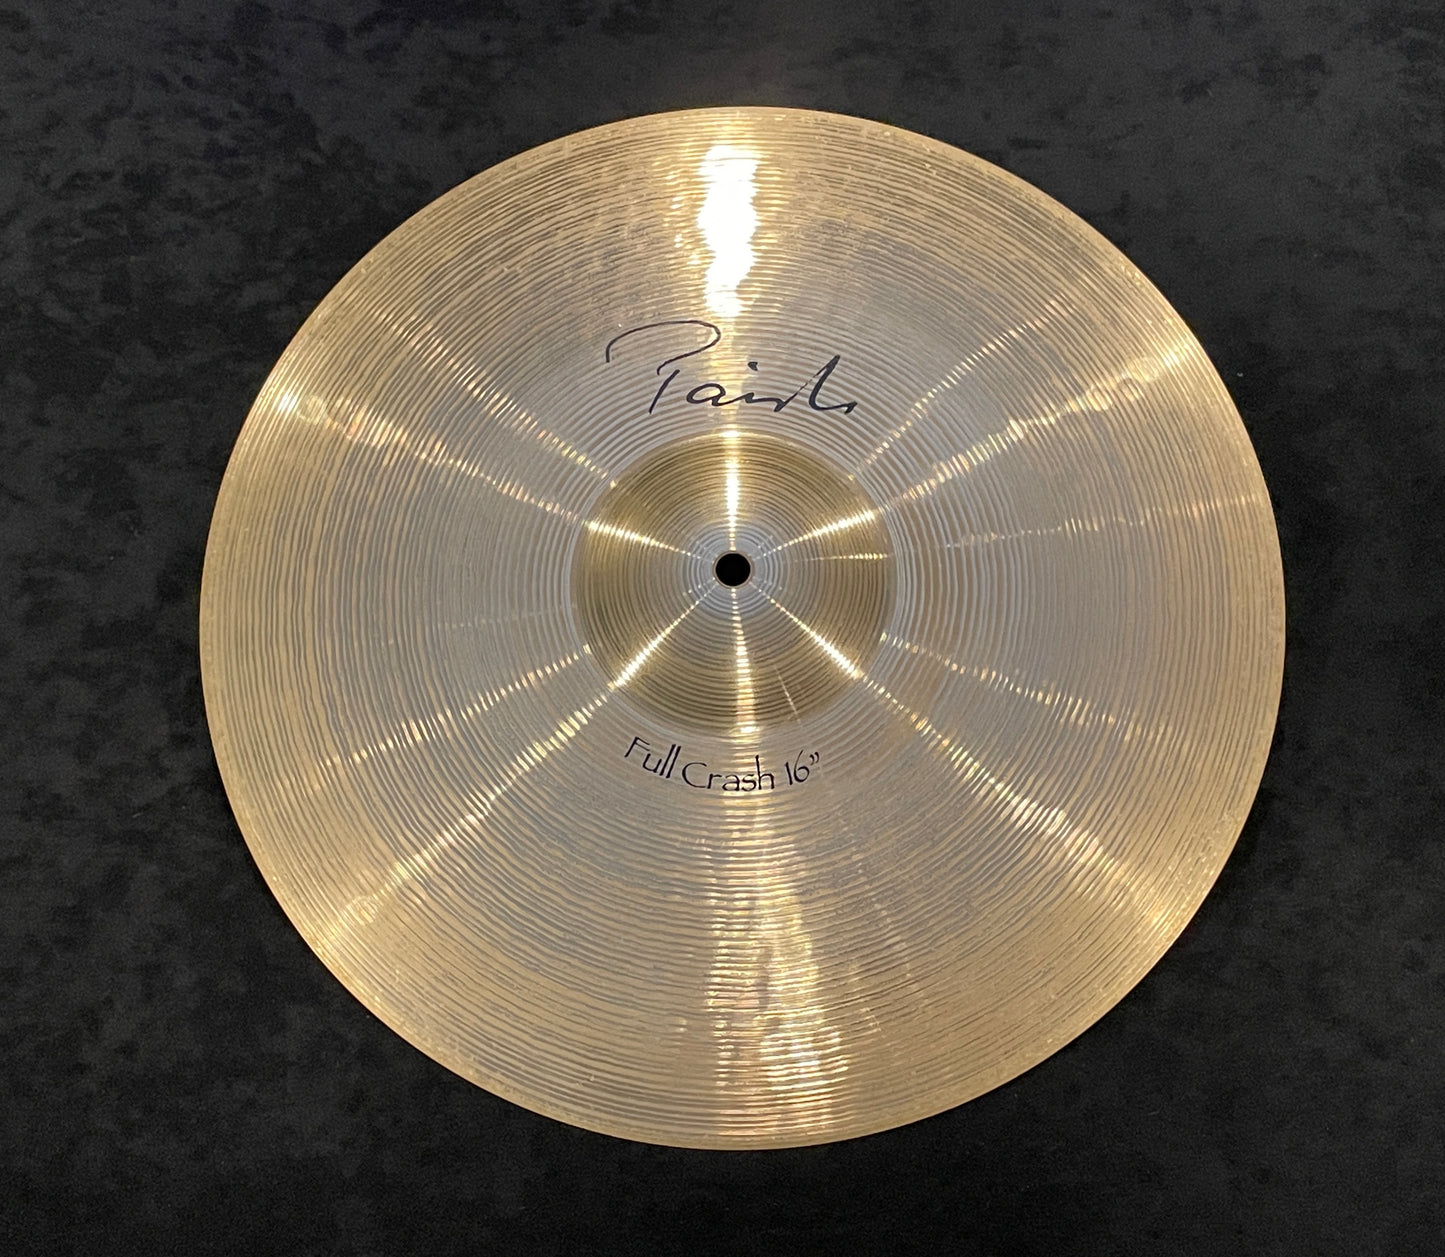 16" Paiste Signature Full Crash Cymbal 998g